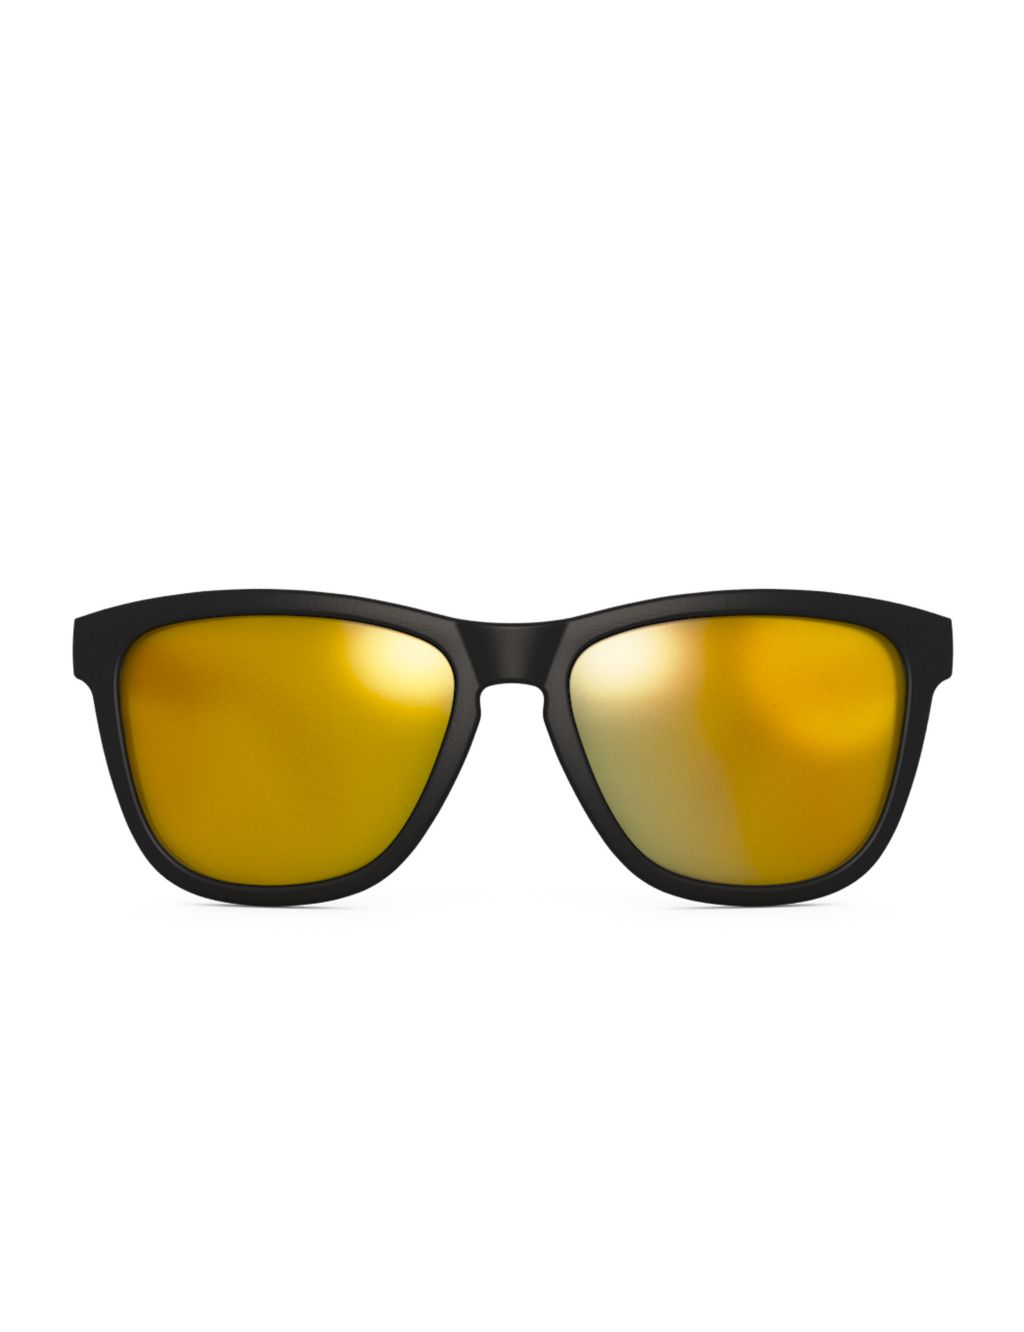 D-Frame Sunglasses image 4